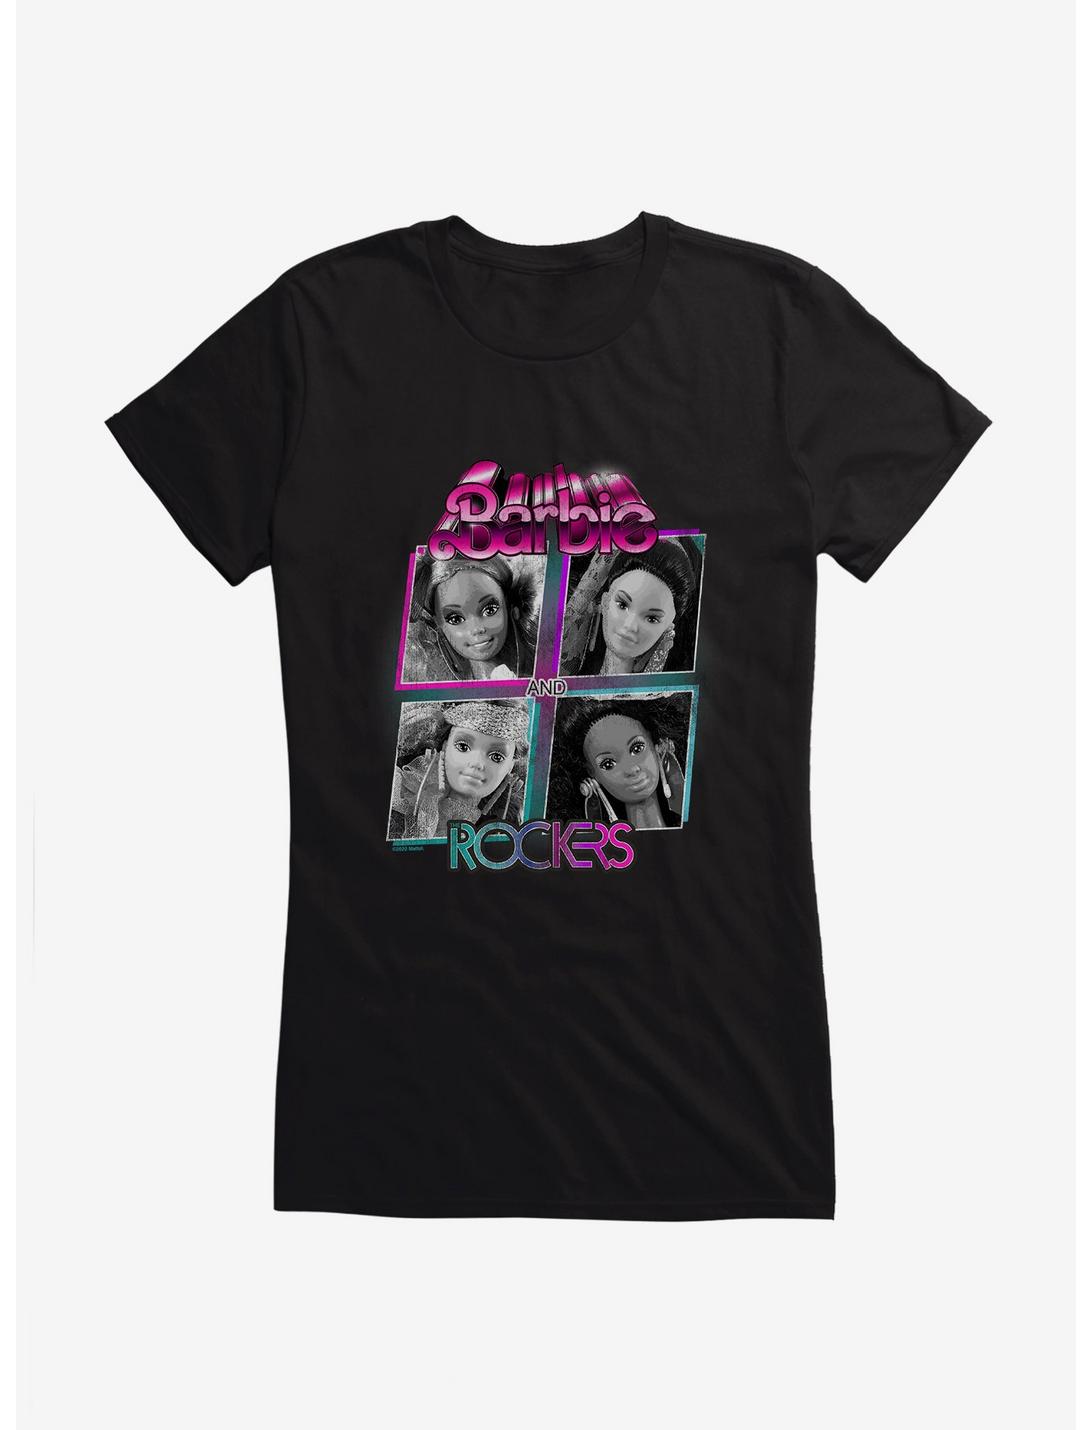 Barbie And The Rockers Girls Rock Girls T-Shirt, , hi-res